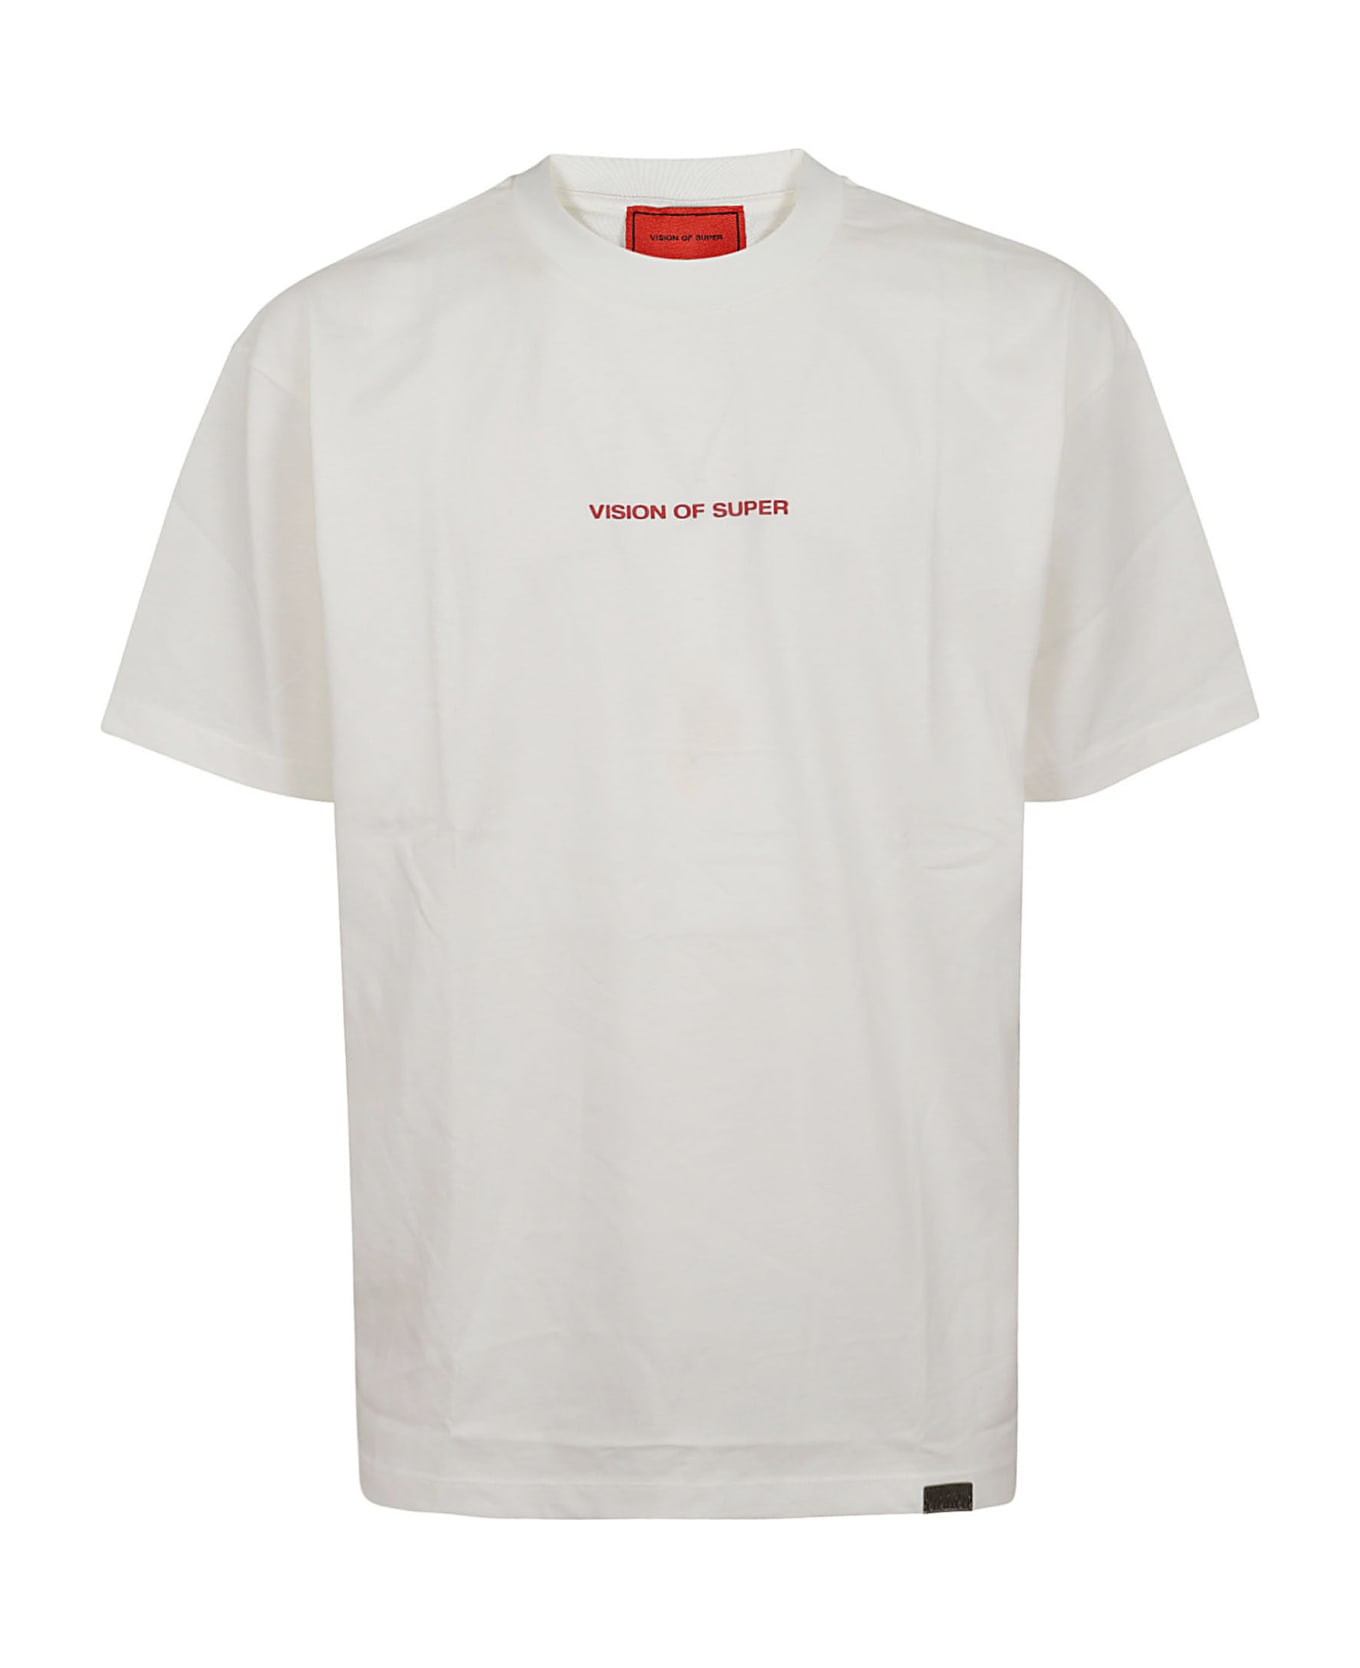 Vision of Super White T-shirt With "vision Slogan" Print - White